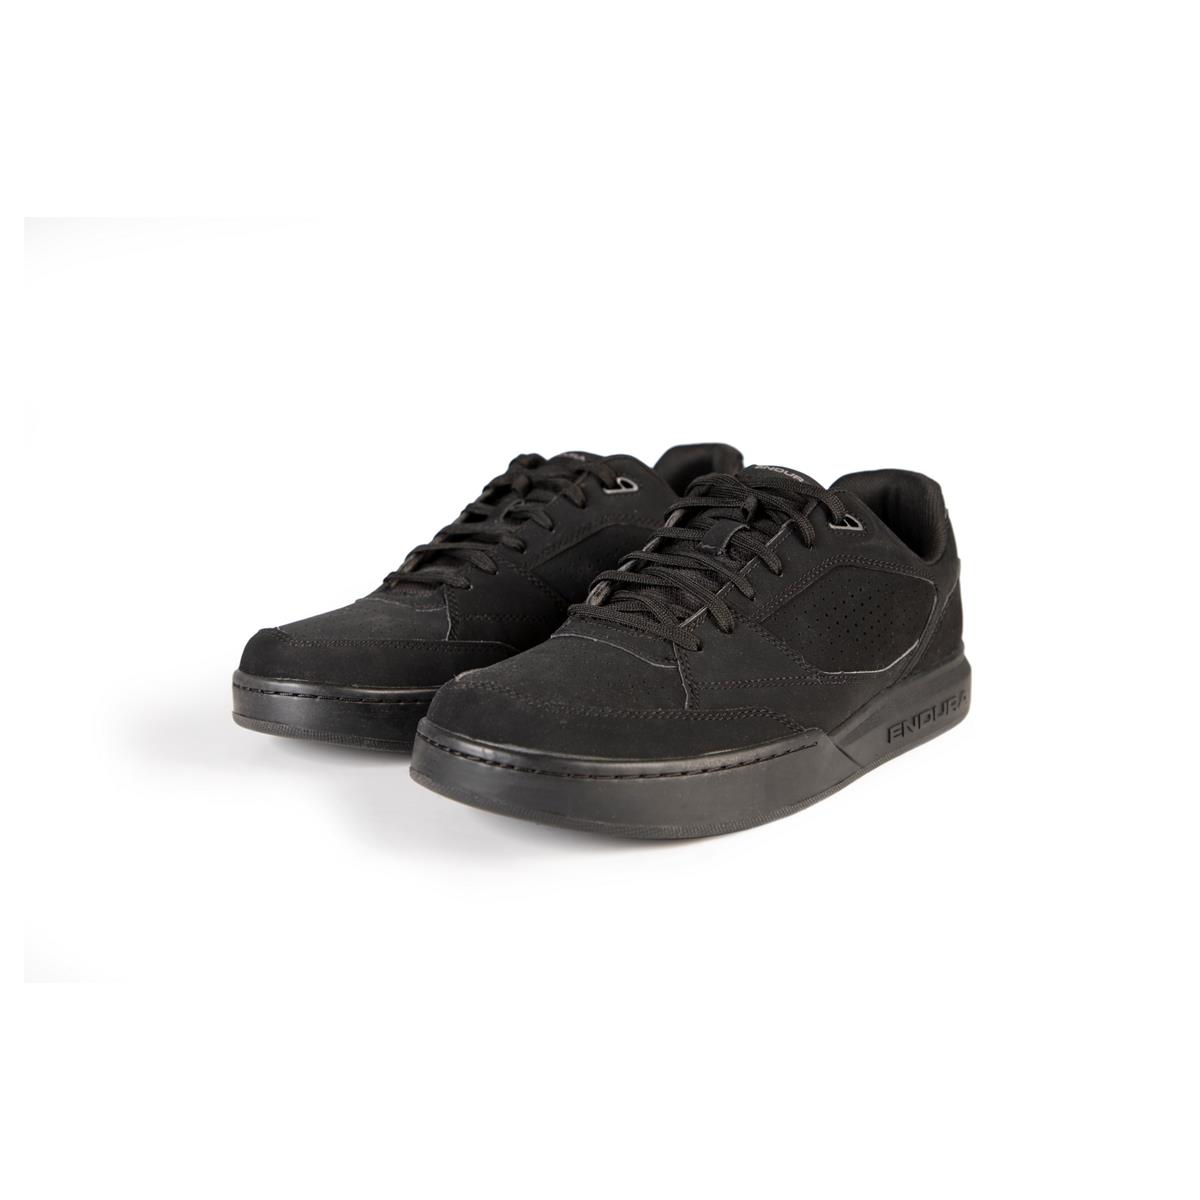 Hummvee Flat Pedal Shoes Black Size 45,5